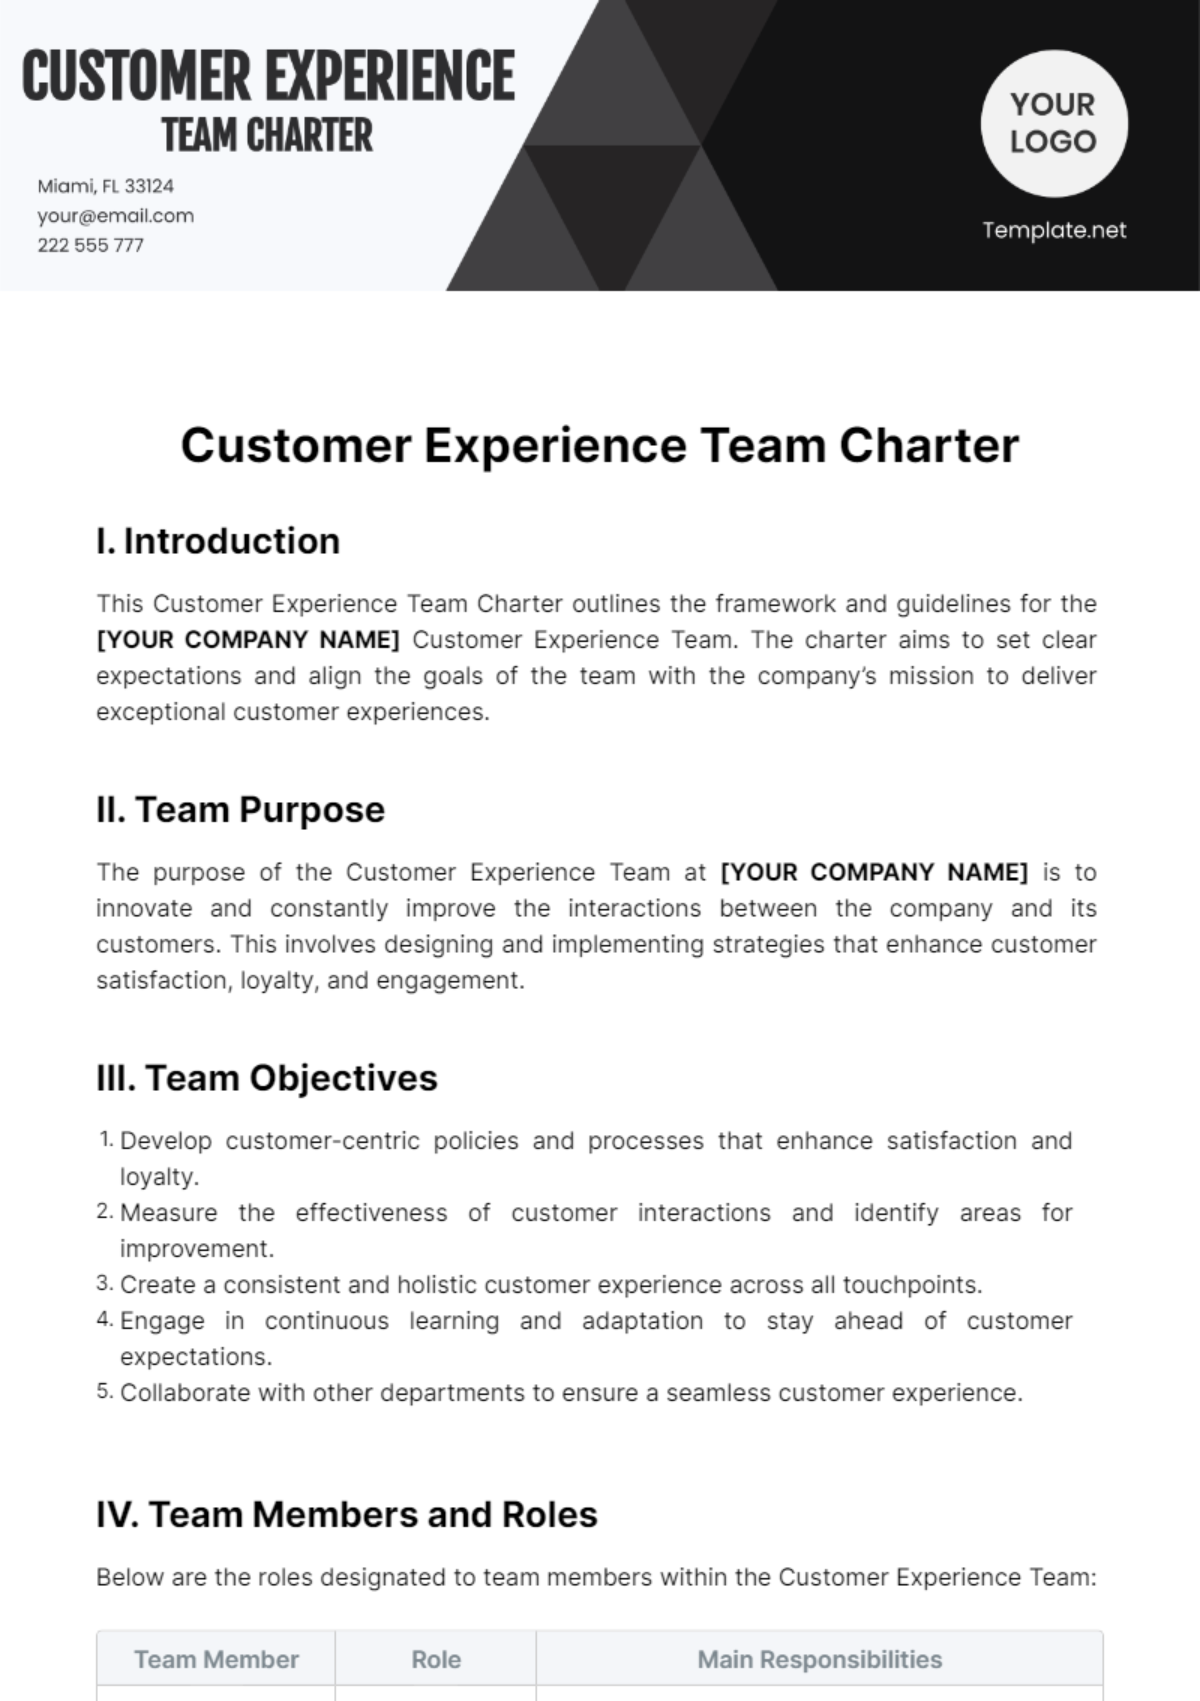 Customer Experience Team Charter Template